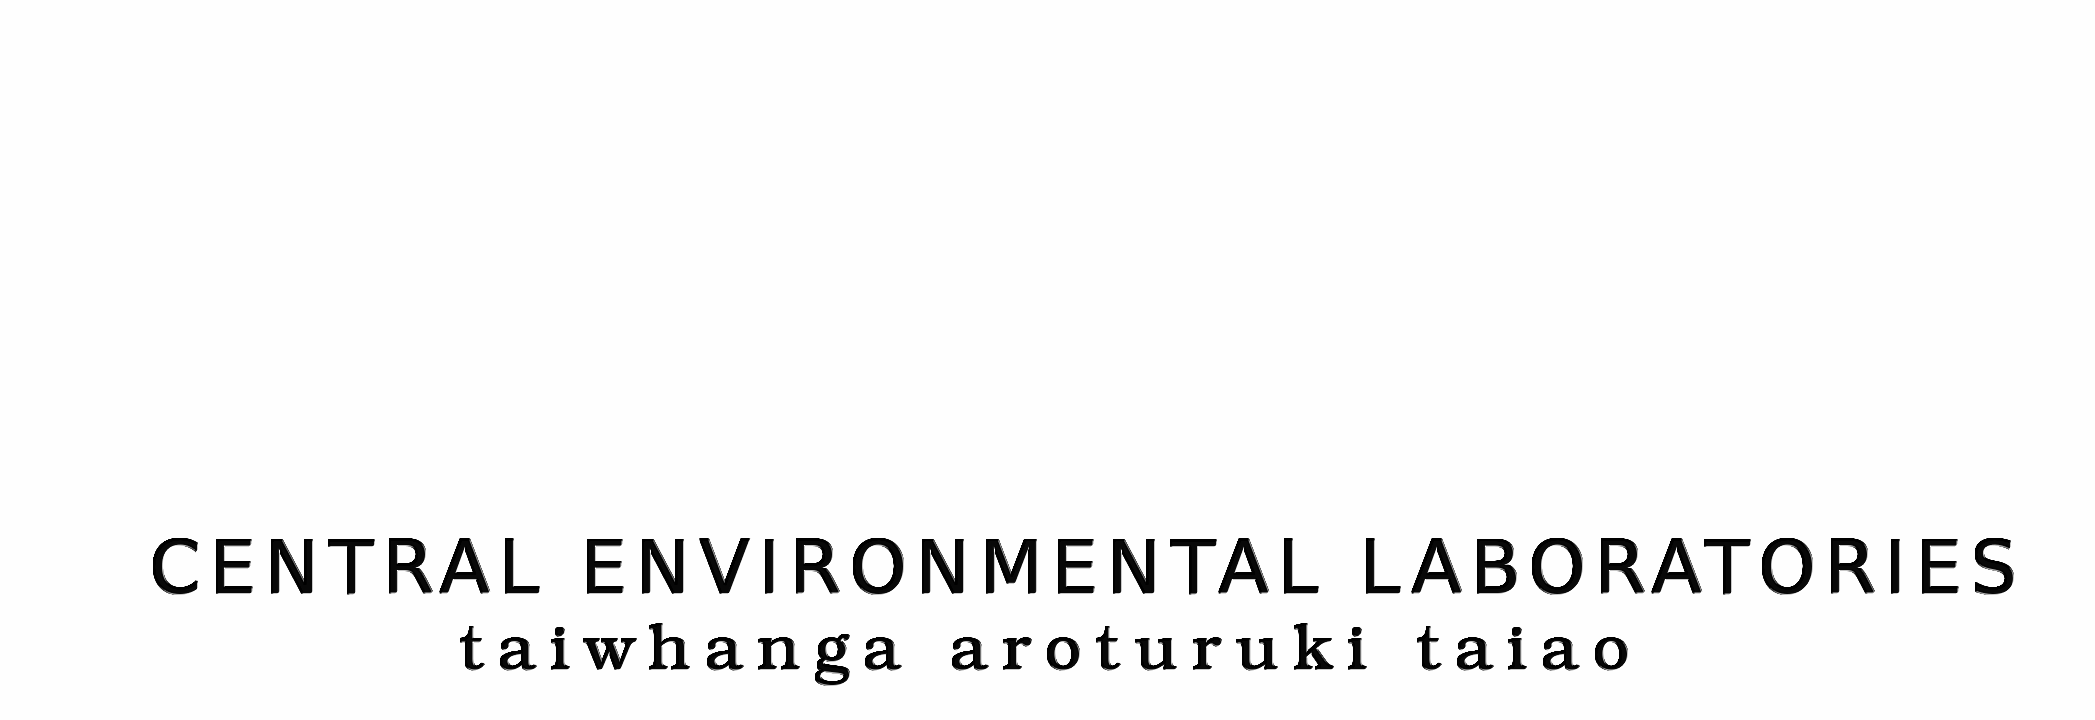 Central Environmental Laboratories